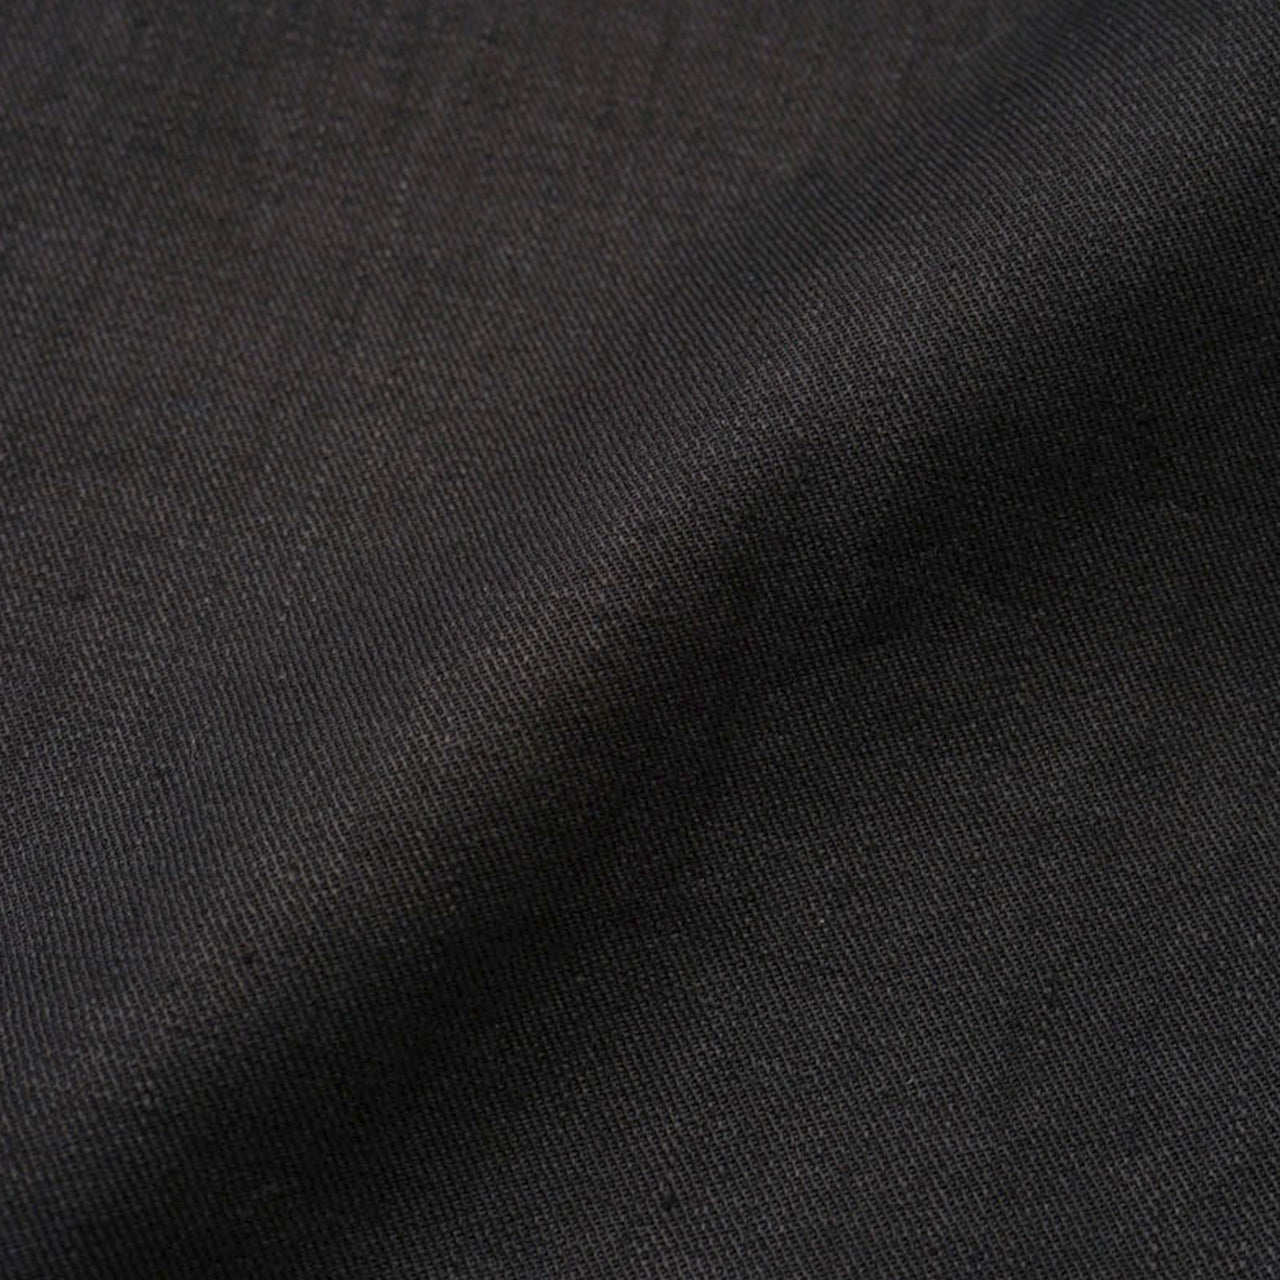 Nigel Cabourn ナイジェル・ケーボン オープン カラー シャツ リネン フリース OPEN COLLAR SHIRT LINEN FLEECE メンズ 80470010001【送料無料】